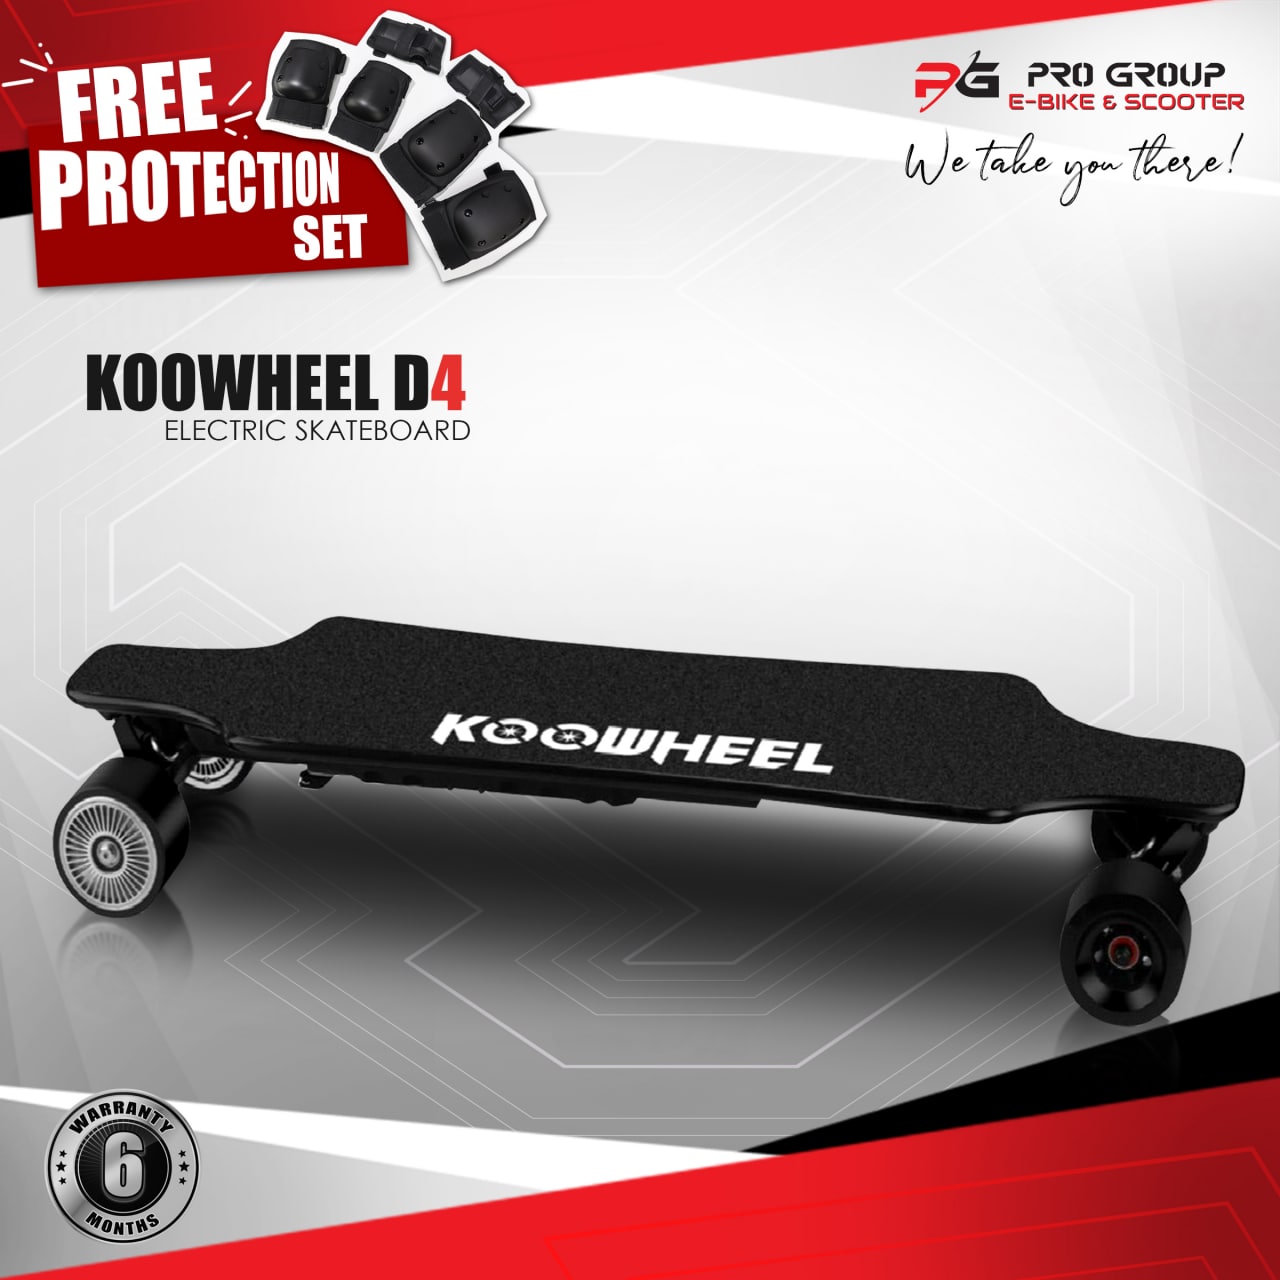 kennis lettergreep houding Koowheel D4Gen2 Electric Skateboard | Pro Group Philippines